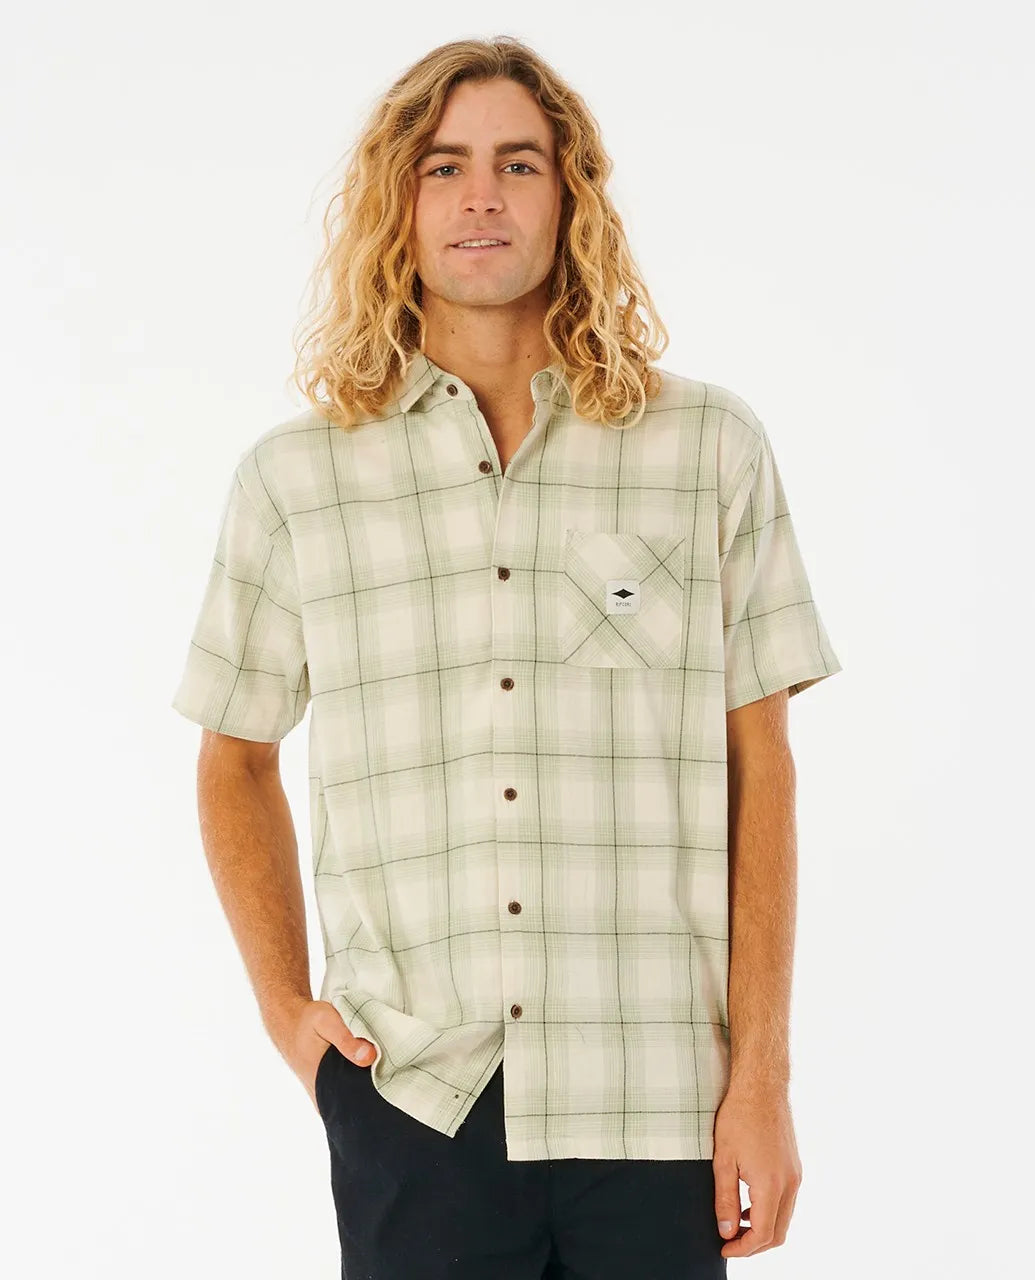 Quality Surf Products Short Sleeve Shirt | Bone - Rip Curl - Beechworth Emporium